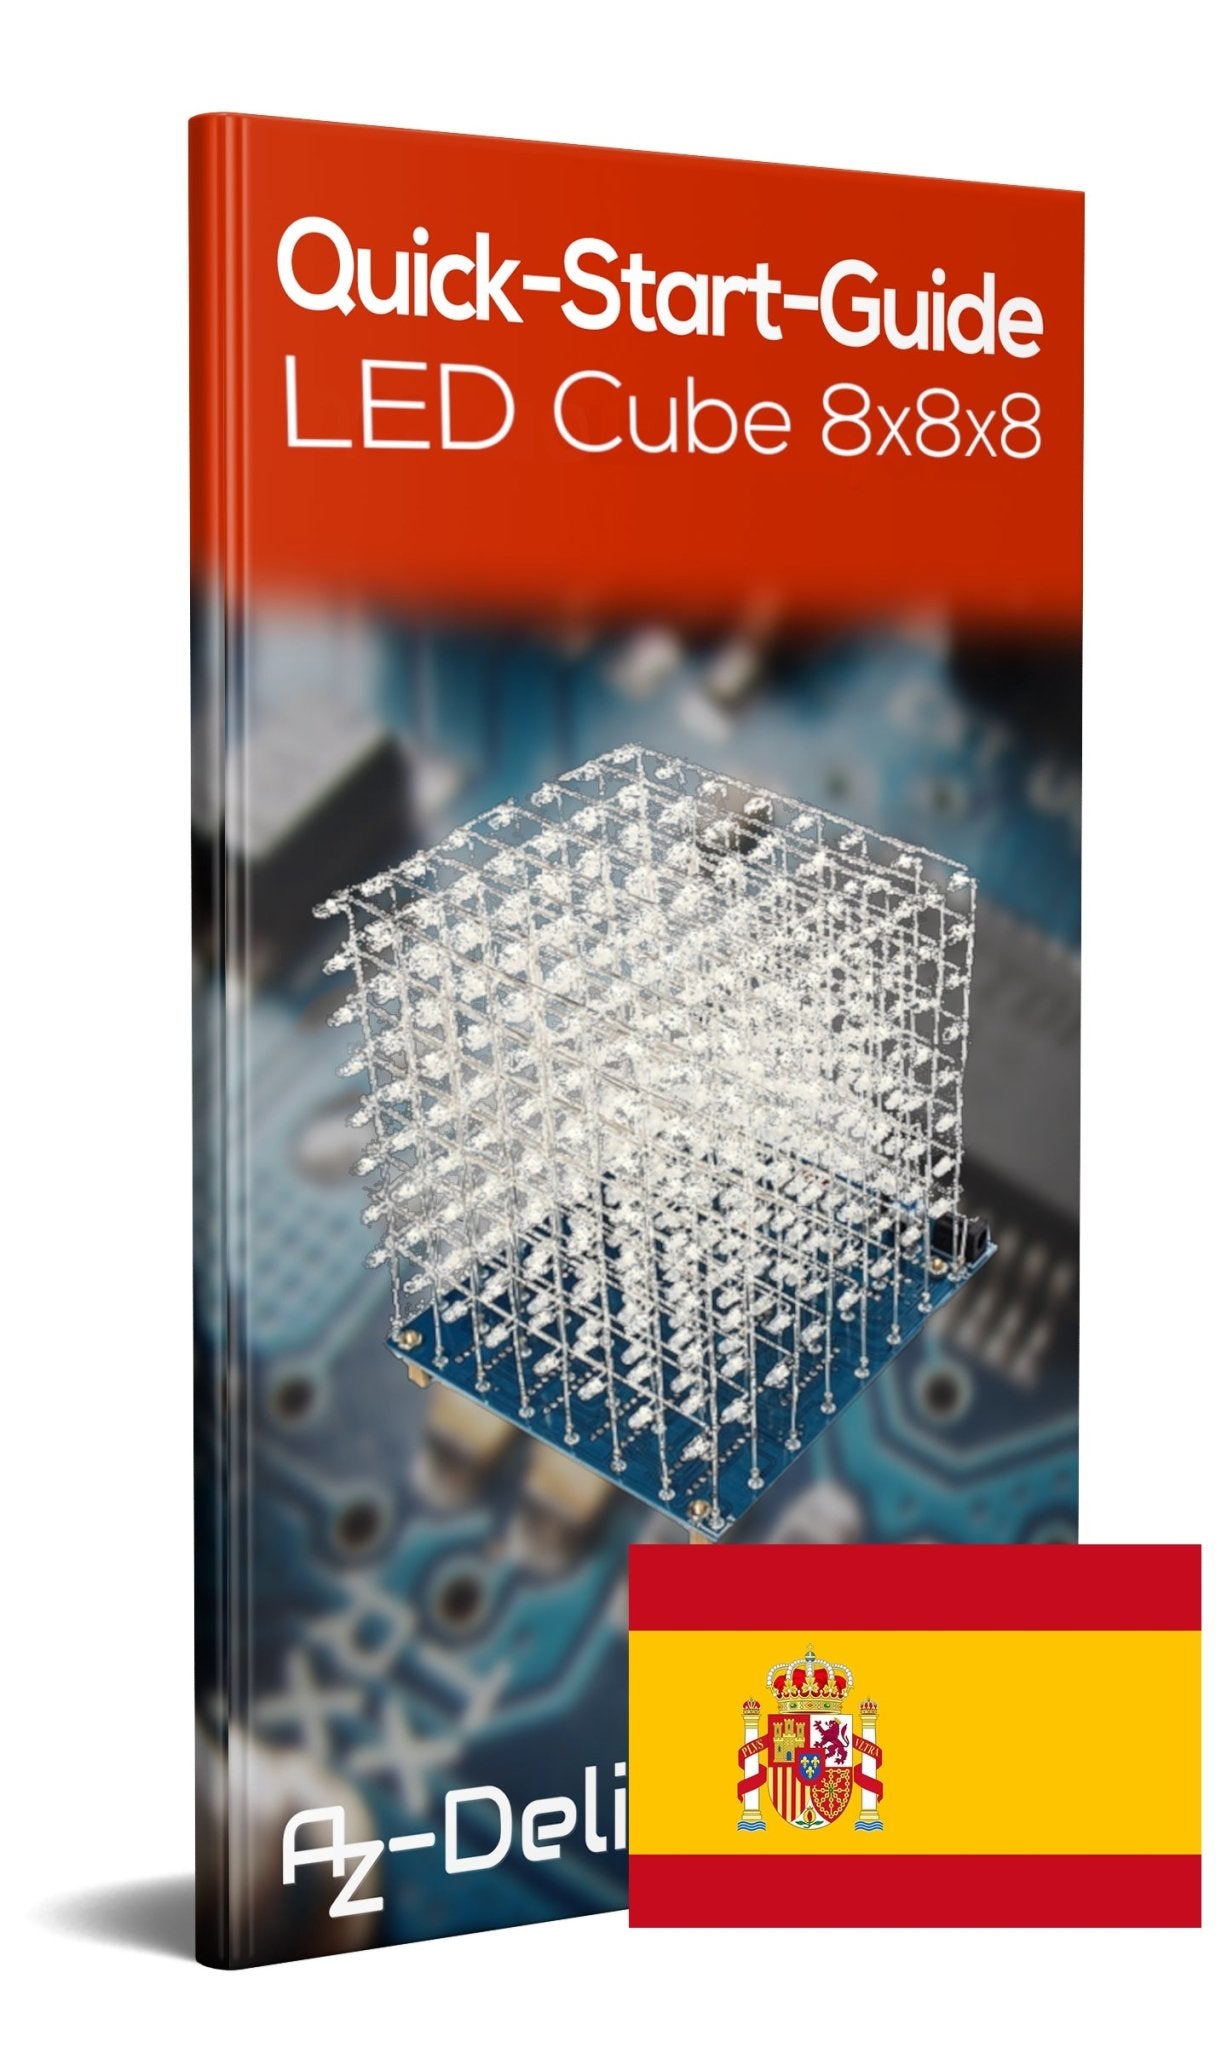 3D LED Cube 8 x 8 x 8 Cube Kit Light Matrix for Electronics Projects